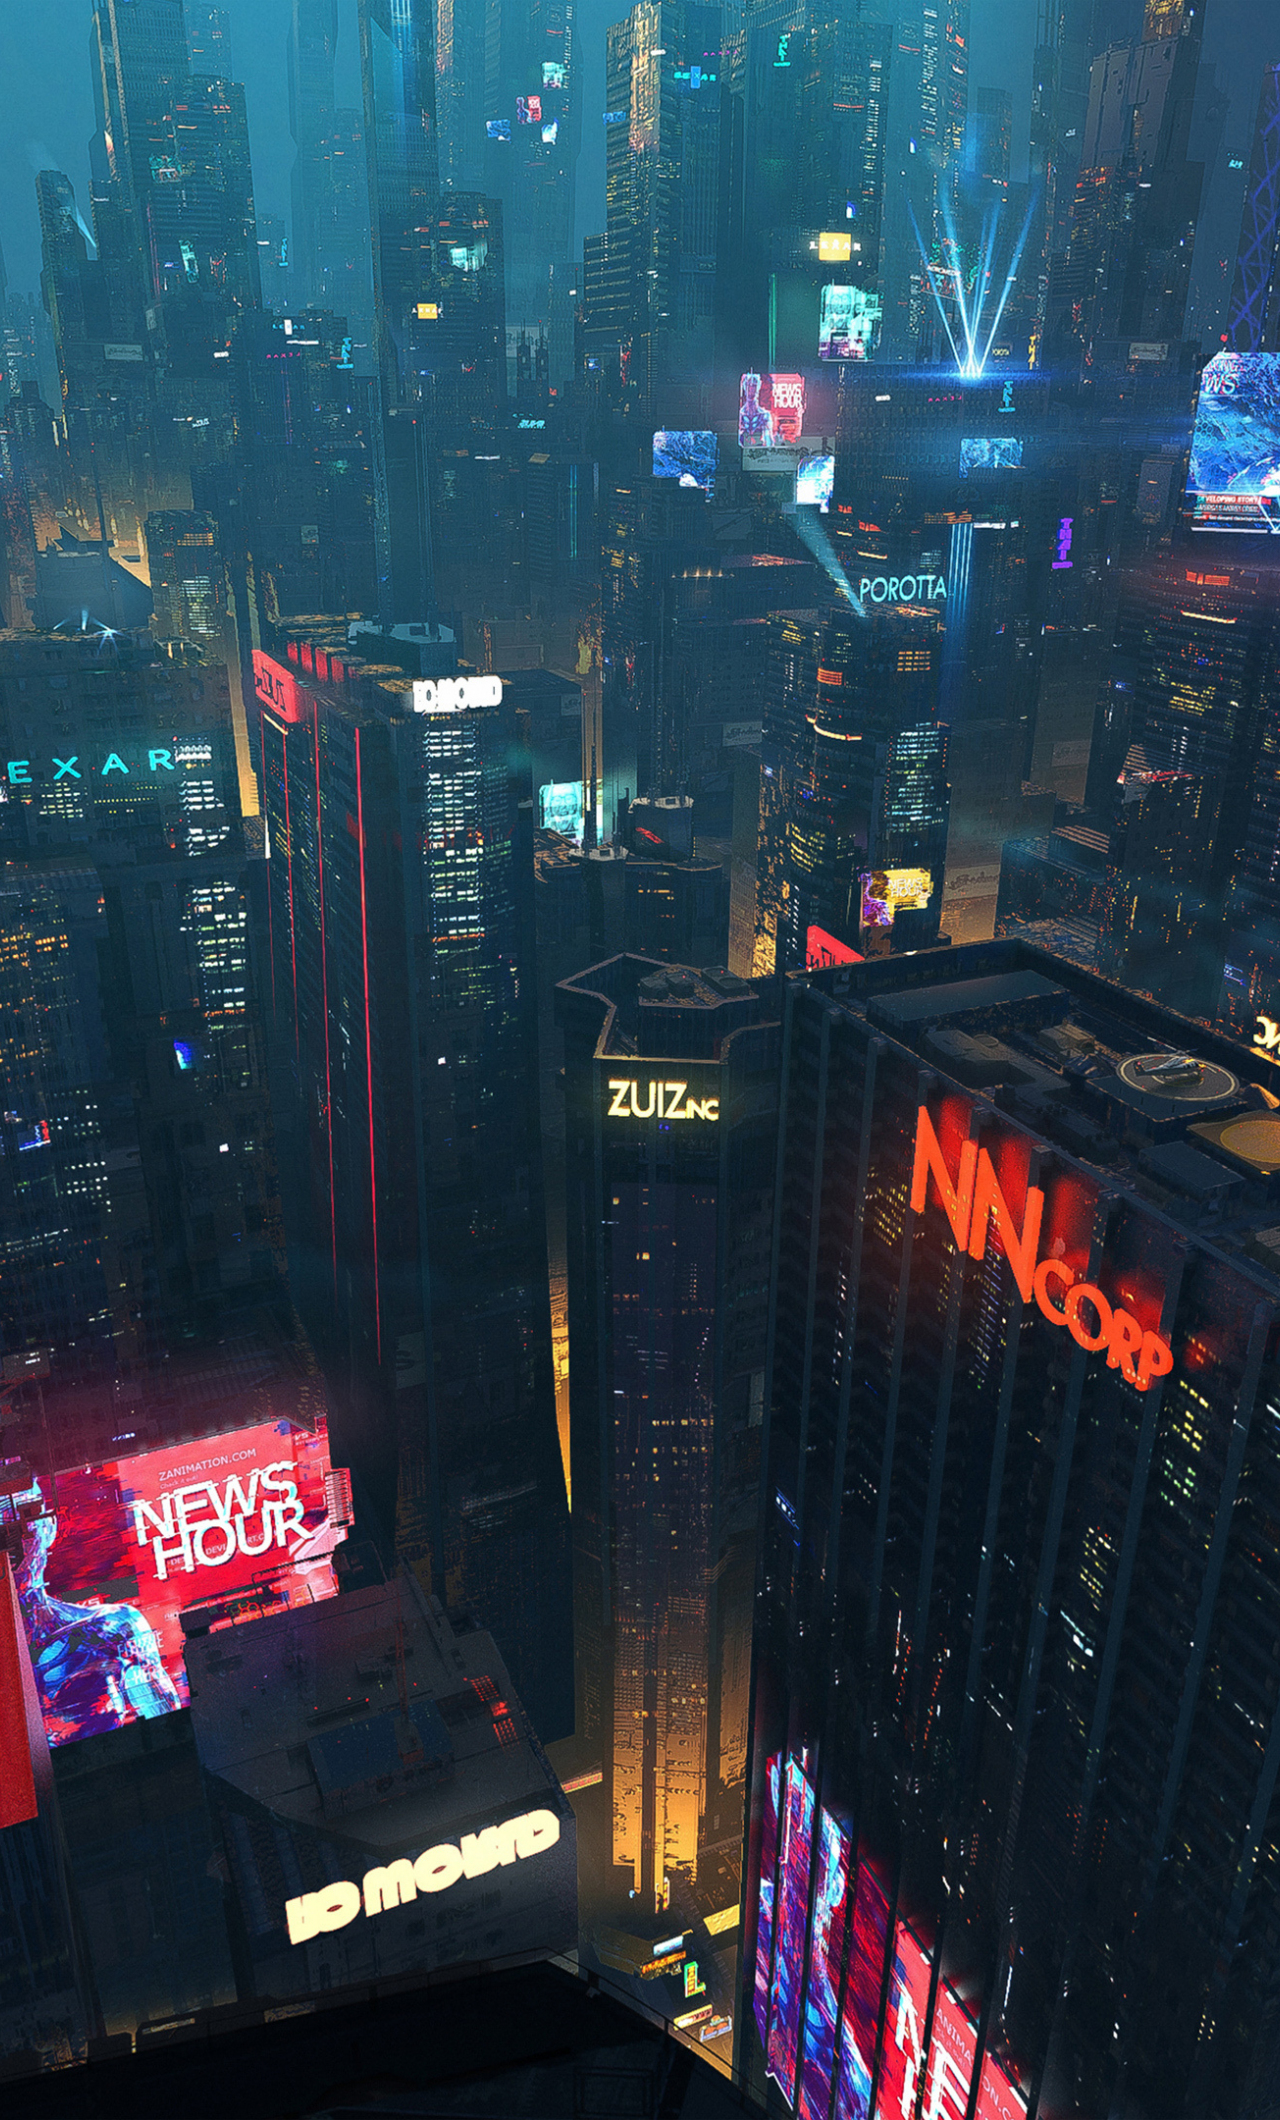 Future city starship futuristic art 640x960 iPhone 44S wallpaper  background picture image